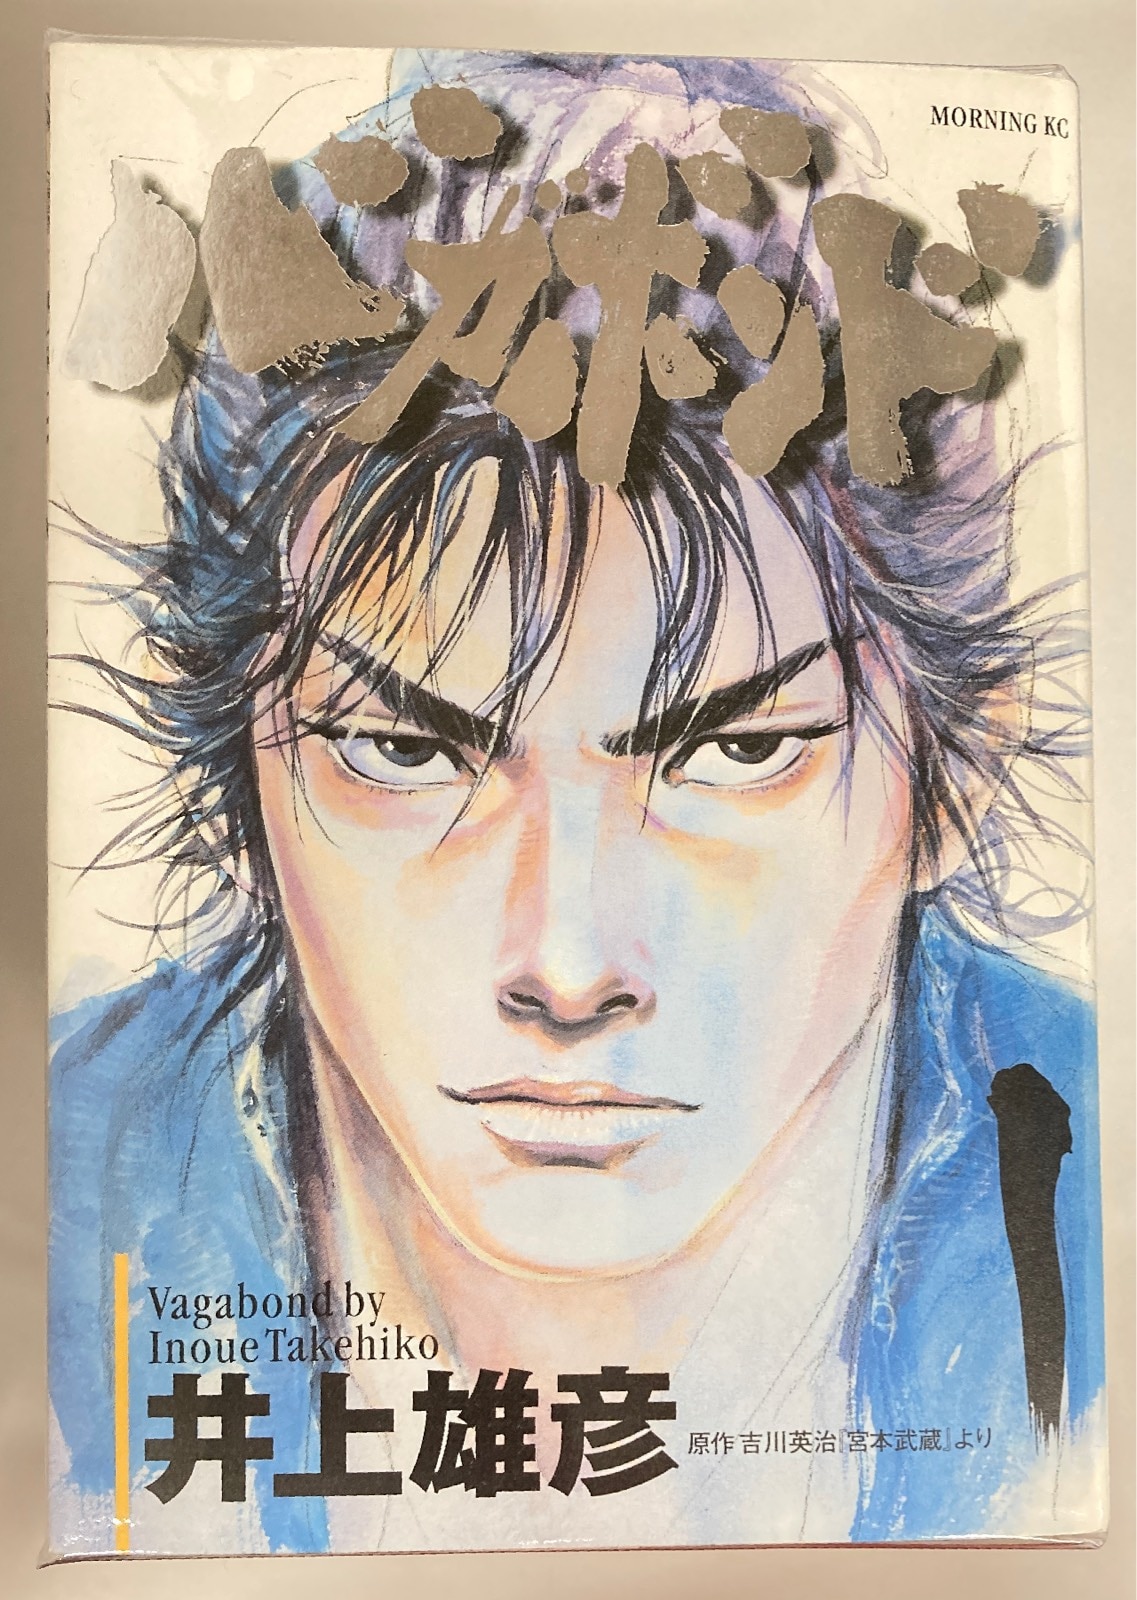 Stijg mouw Woestijn Kodansha Morning KC Takehiko Inoue Vagabond 1 to 37 volumes latest set |  Mandarake Online Shop